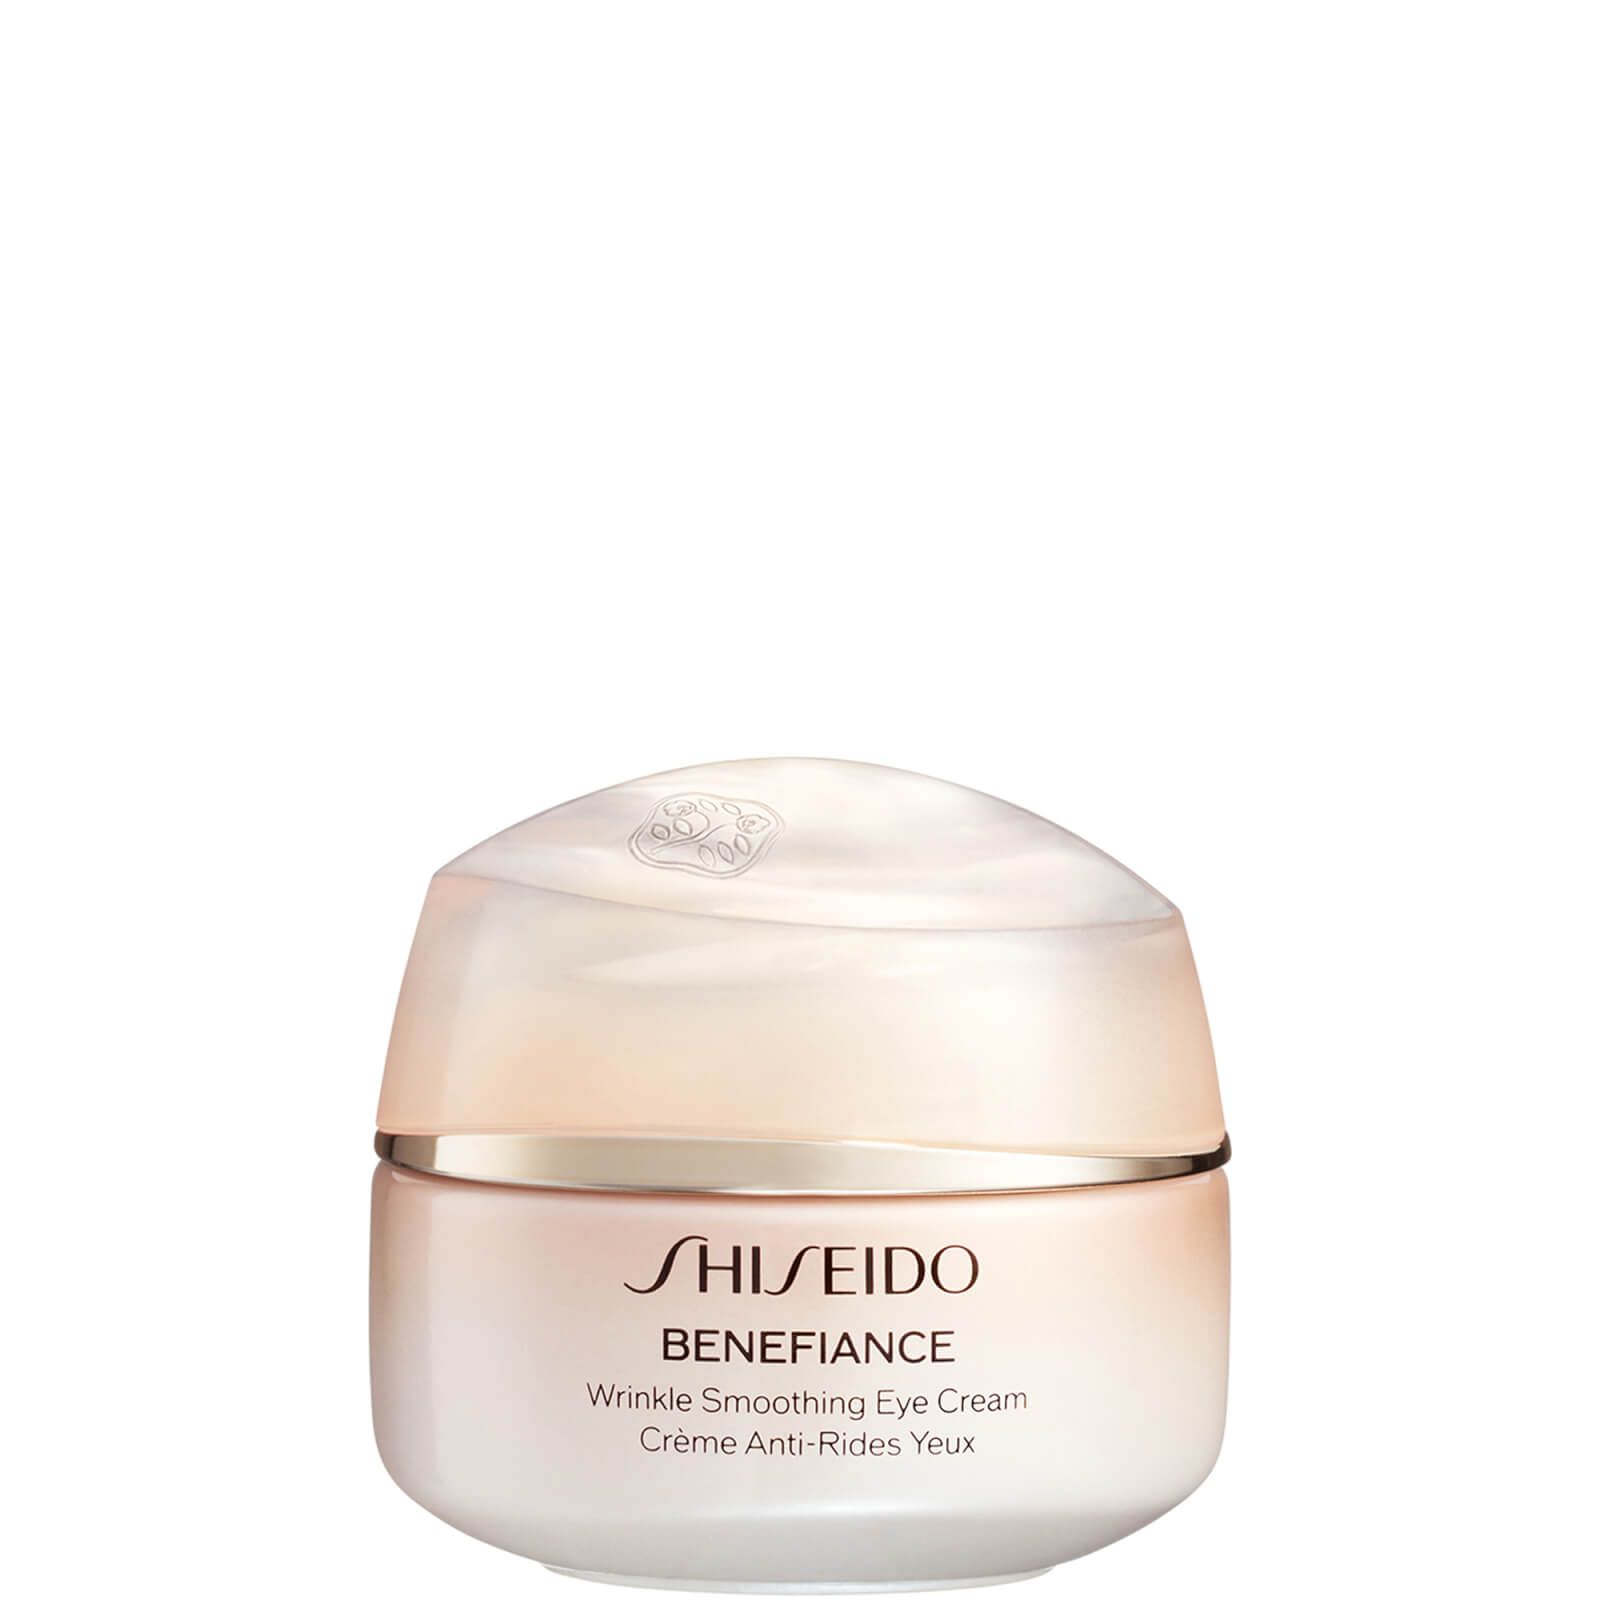 Shiseido Benefiance Wrinkle Smoothing Day Emulsion SPF 20. Shiseido Benefiance Wrinkle Smoothing Cream enriched. Shiseido Benefiance Wrinkle Smoothing Day Emulsion. Shiseido benefiance wrinkle smoothing